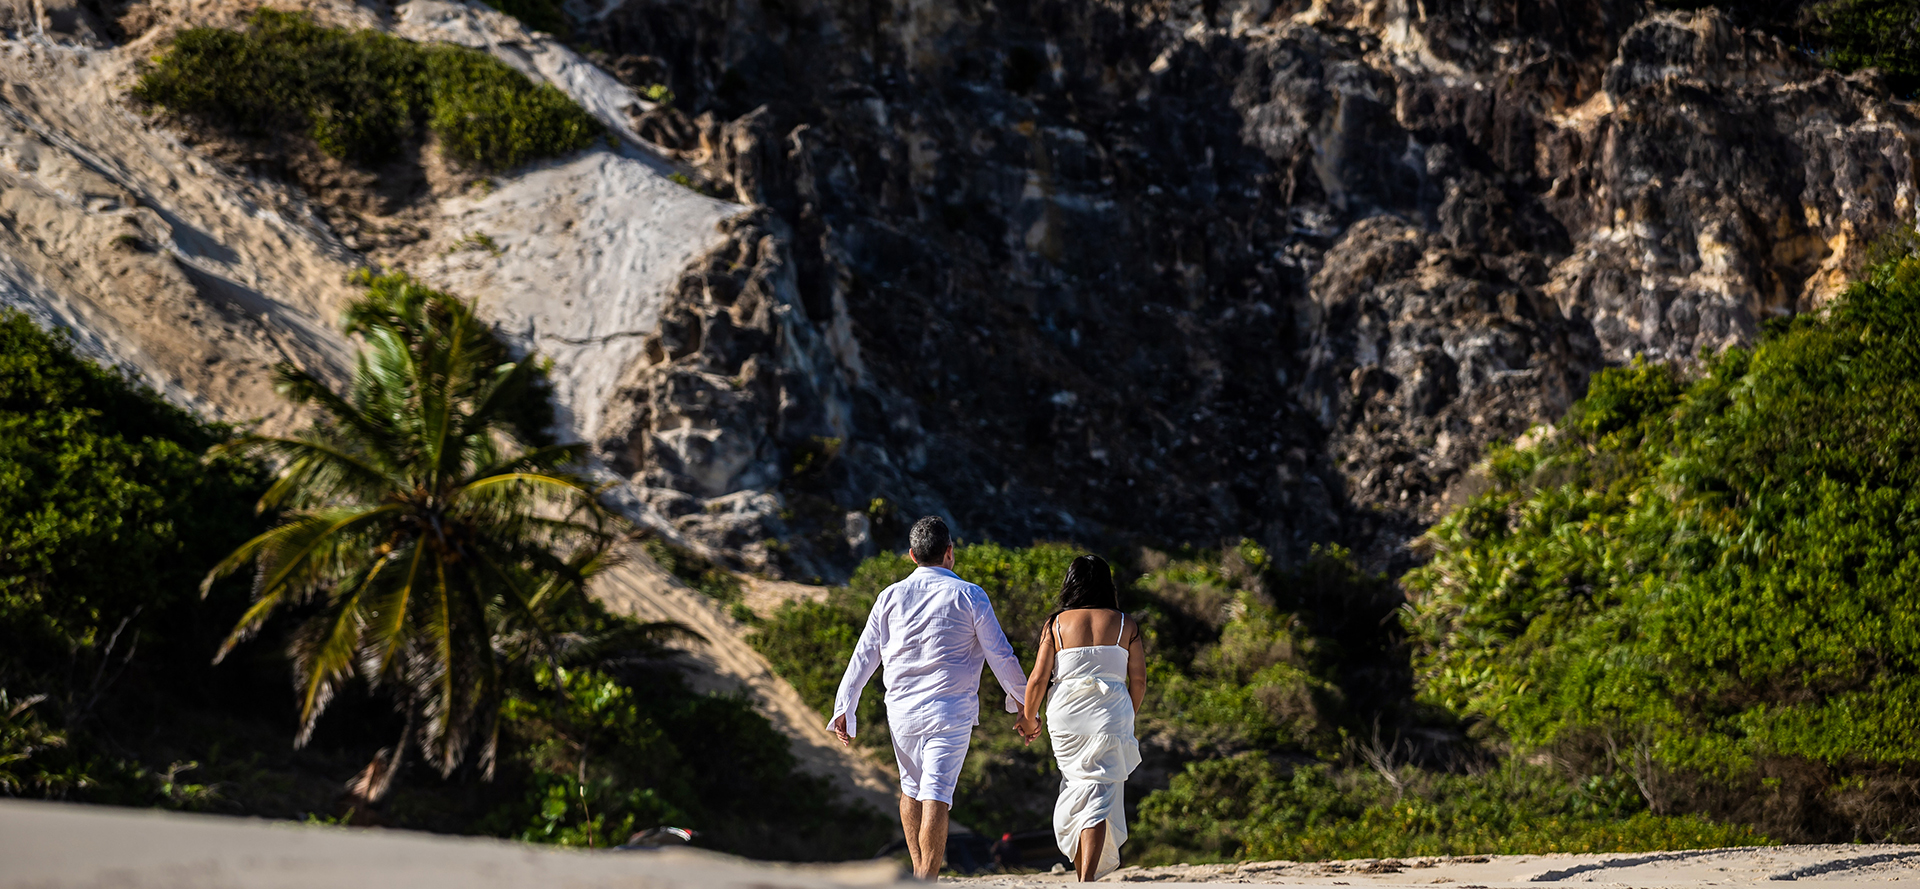 Samoan couple on a date walking along the beach.